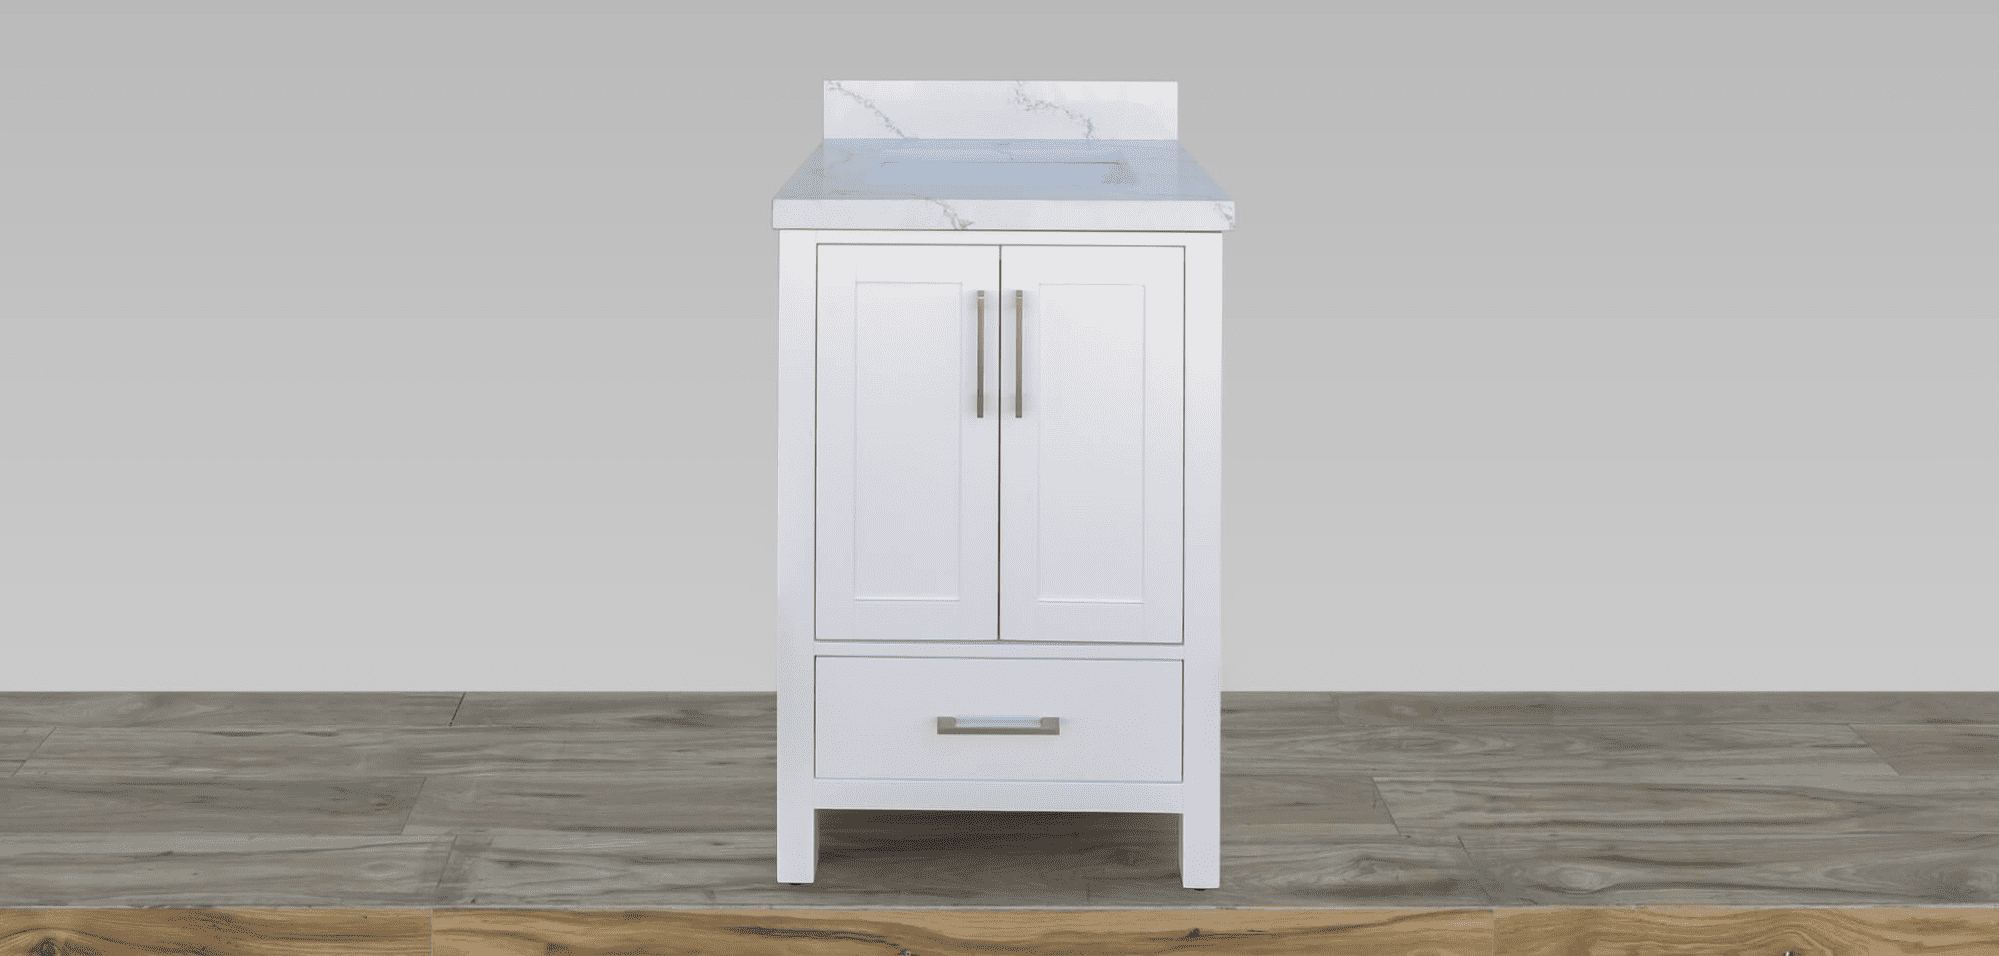 Cabinet Design Ideas for Small Bathrooms - 405 Cabinets & Stone - 1